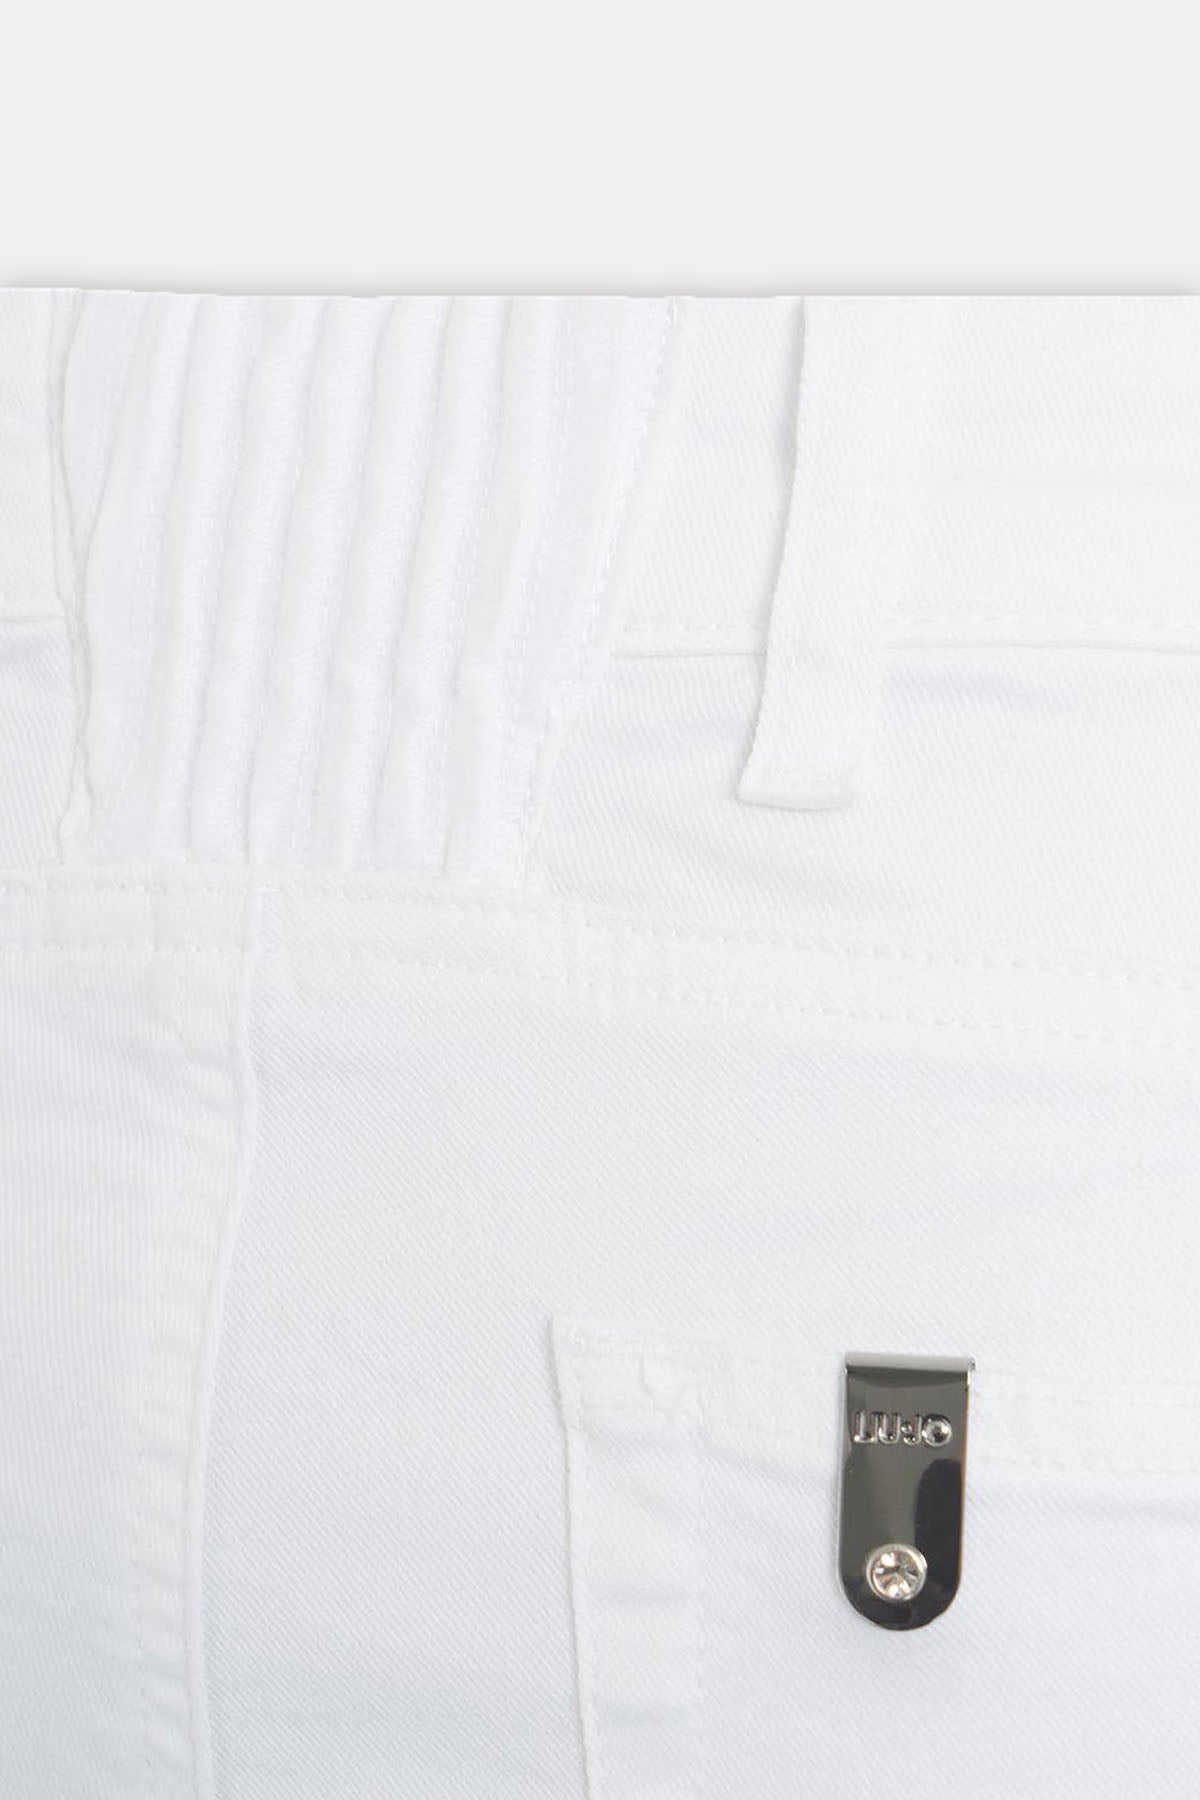 Liu Jo Beli Lastikli Crop Geniş Paça Jeans